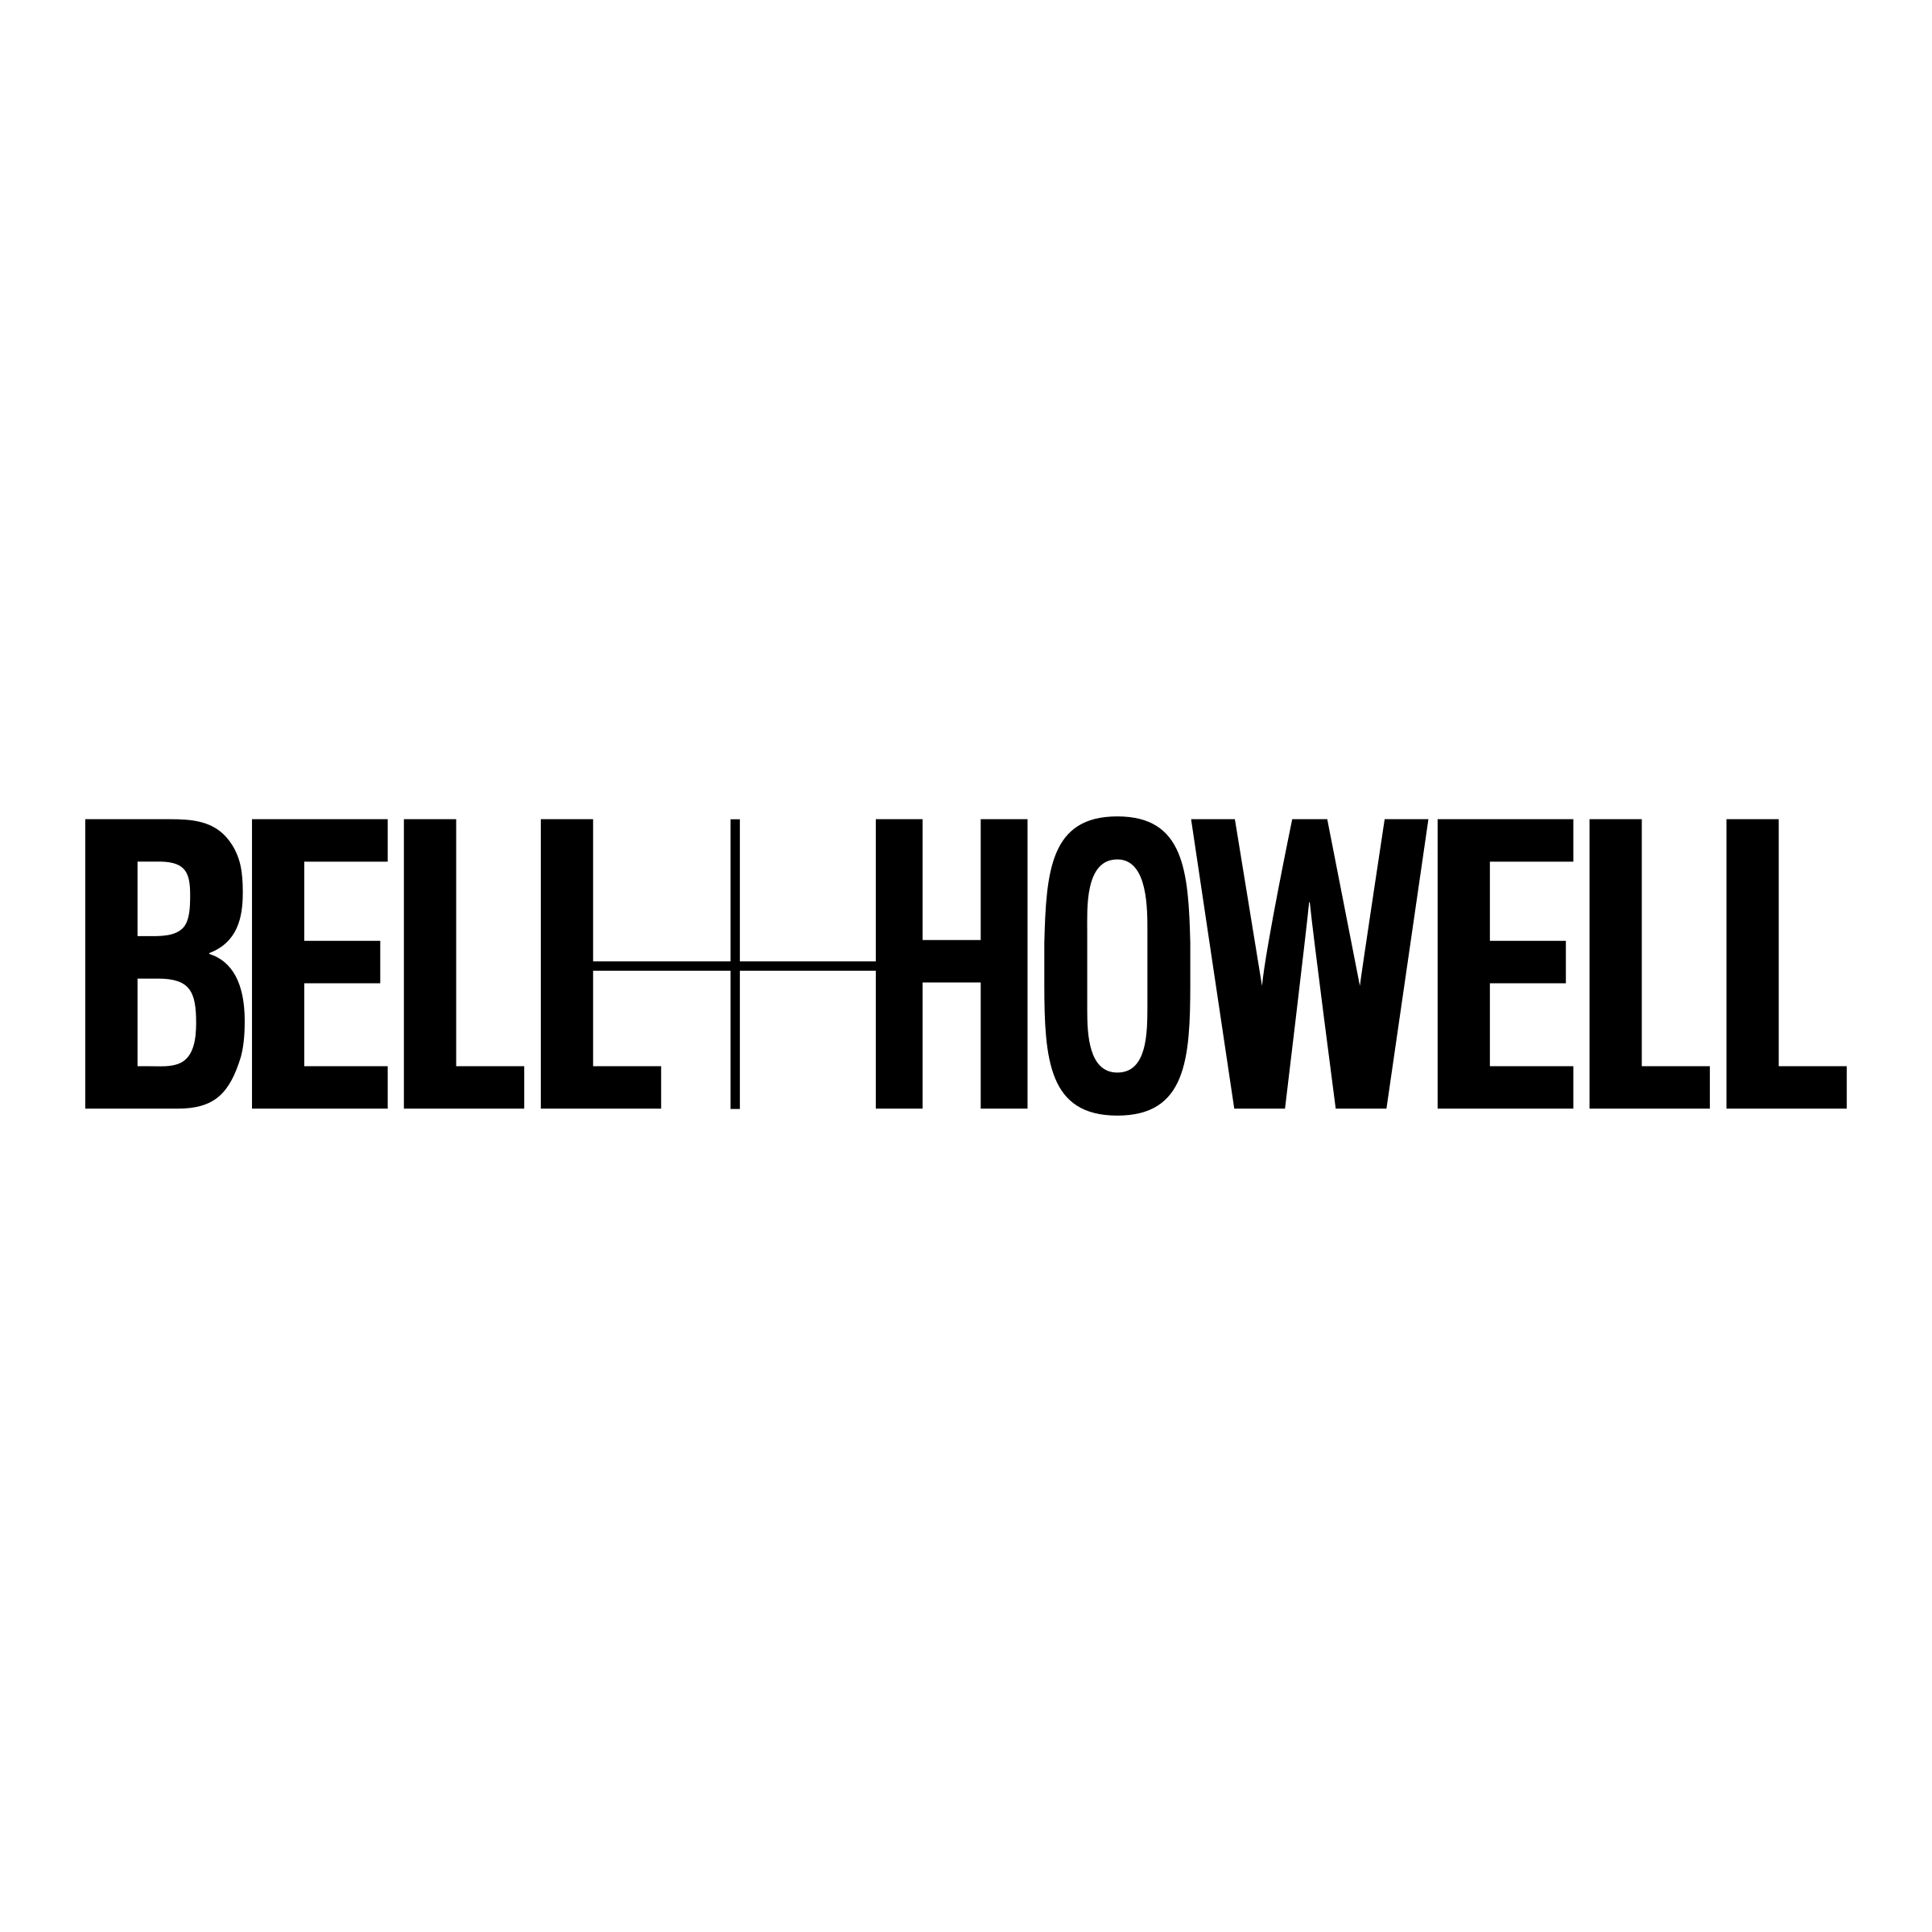 Howell Logo - Bell & Howell Logo PNG Transparent & SVG Vector